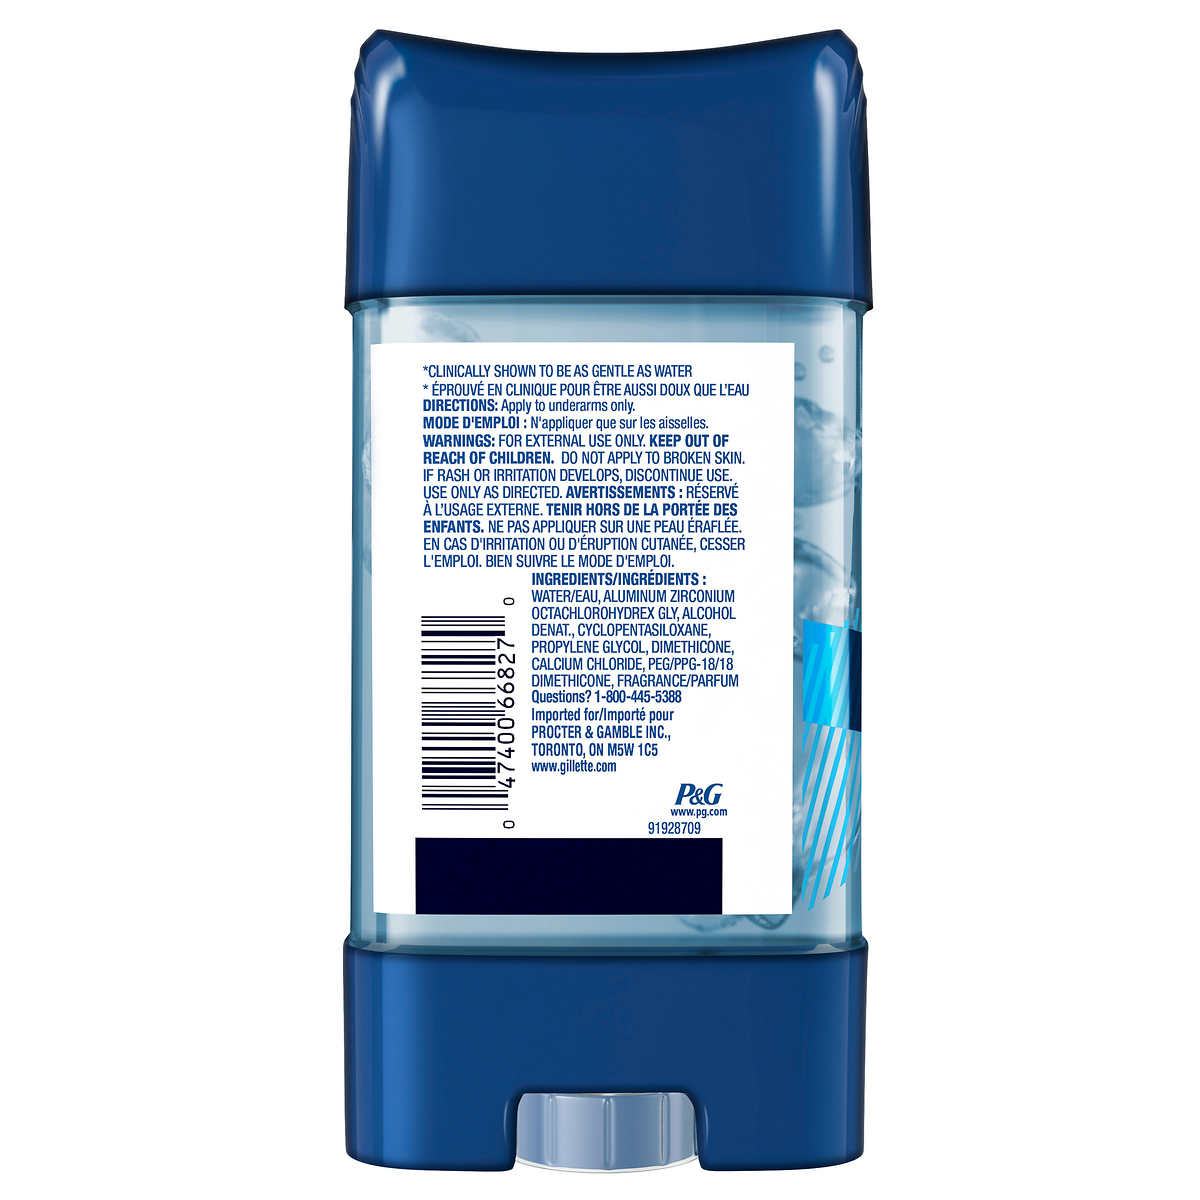 Gillette Antiperspirant Deodorant, Clear Gel, Cool Wave 108 g - canavitam